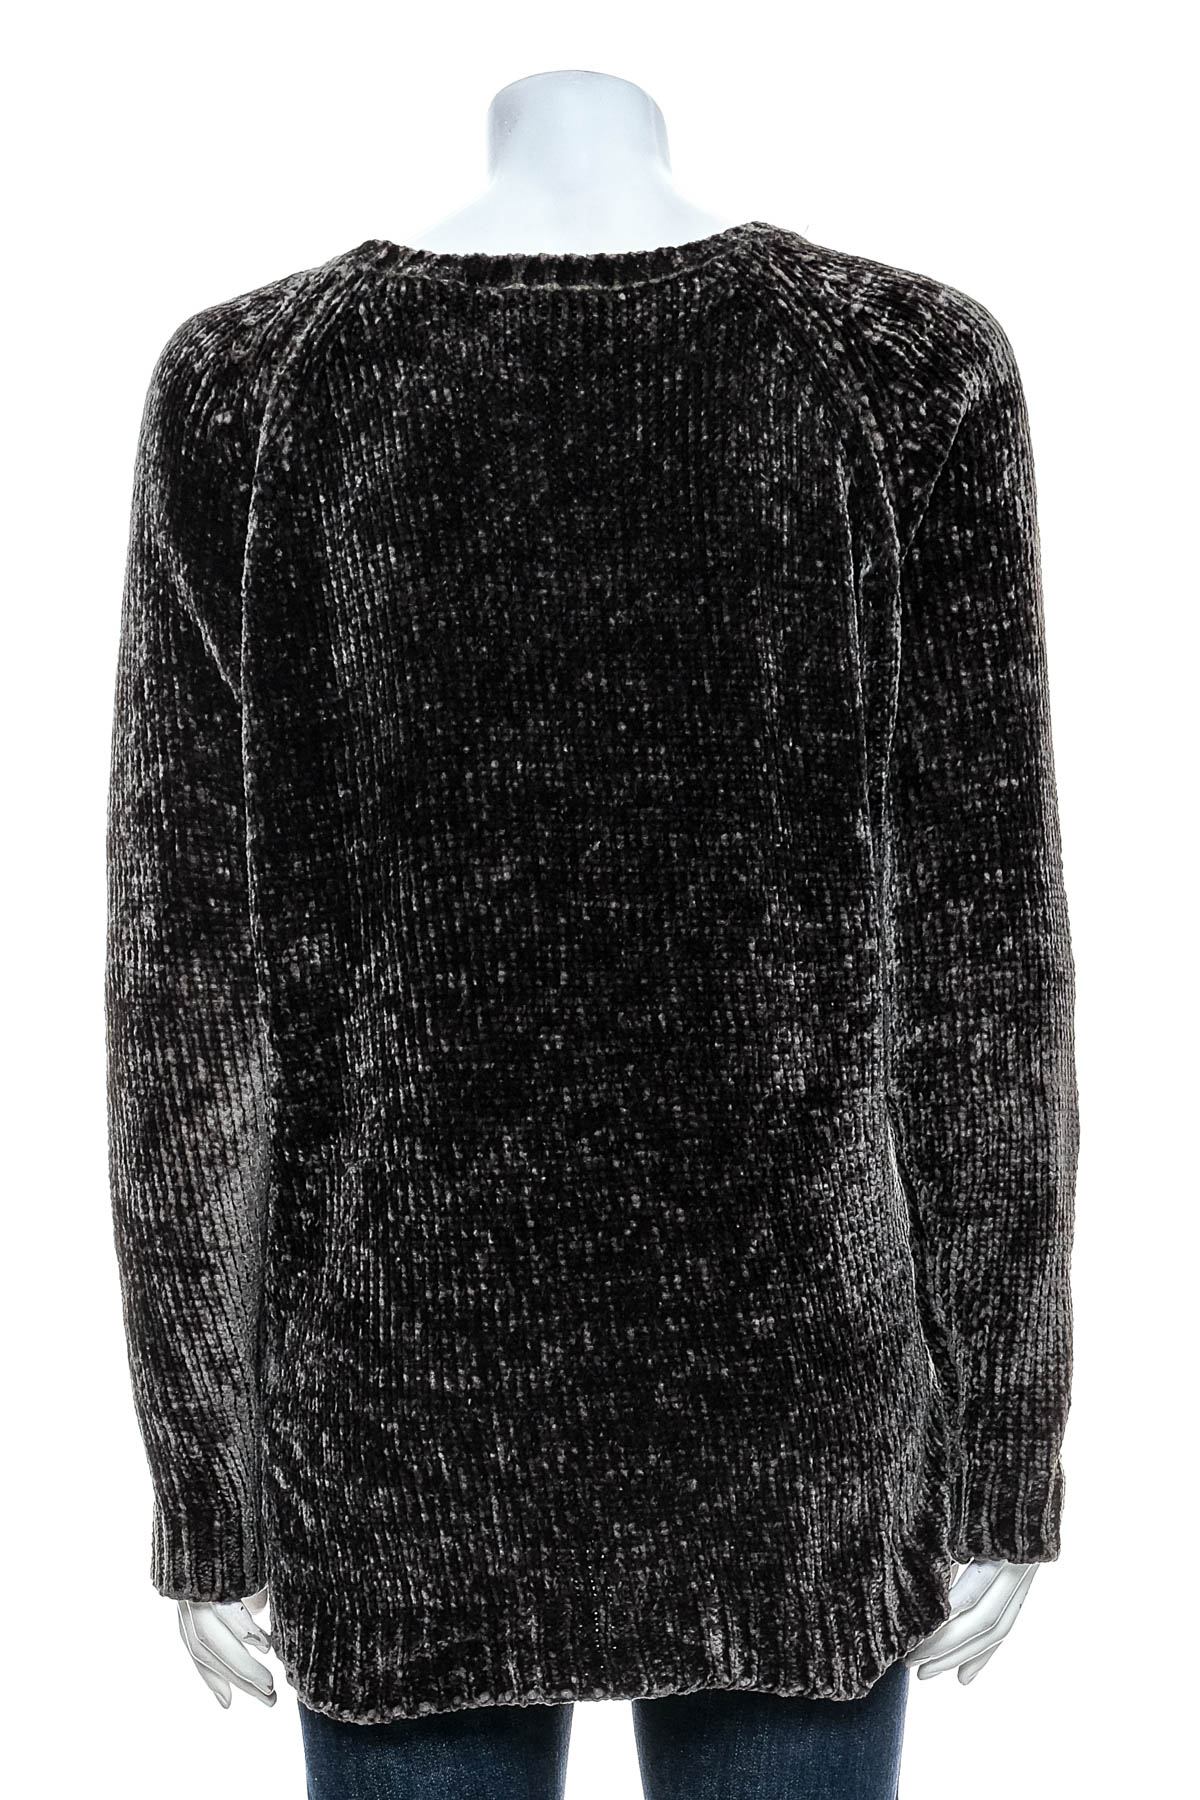 Women's sweater - George. - 1